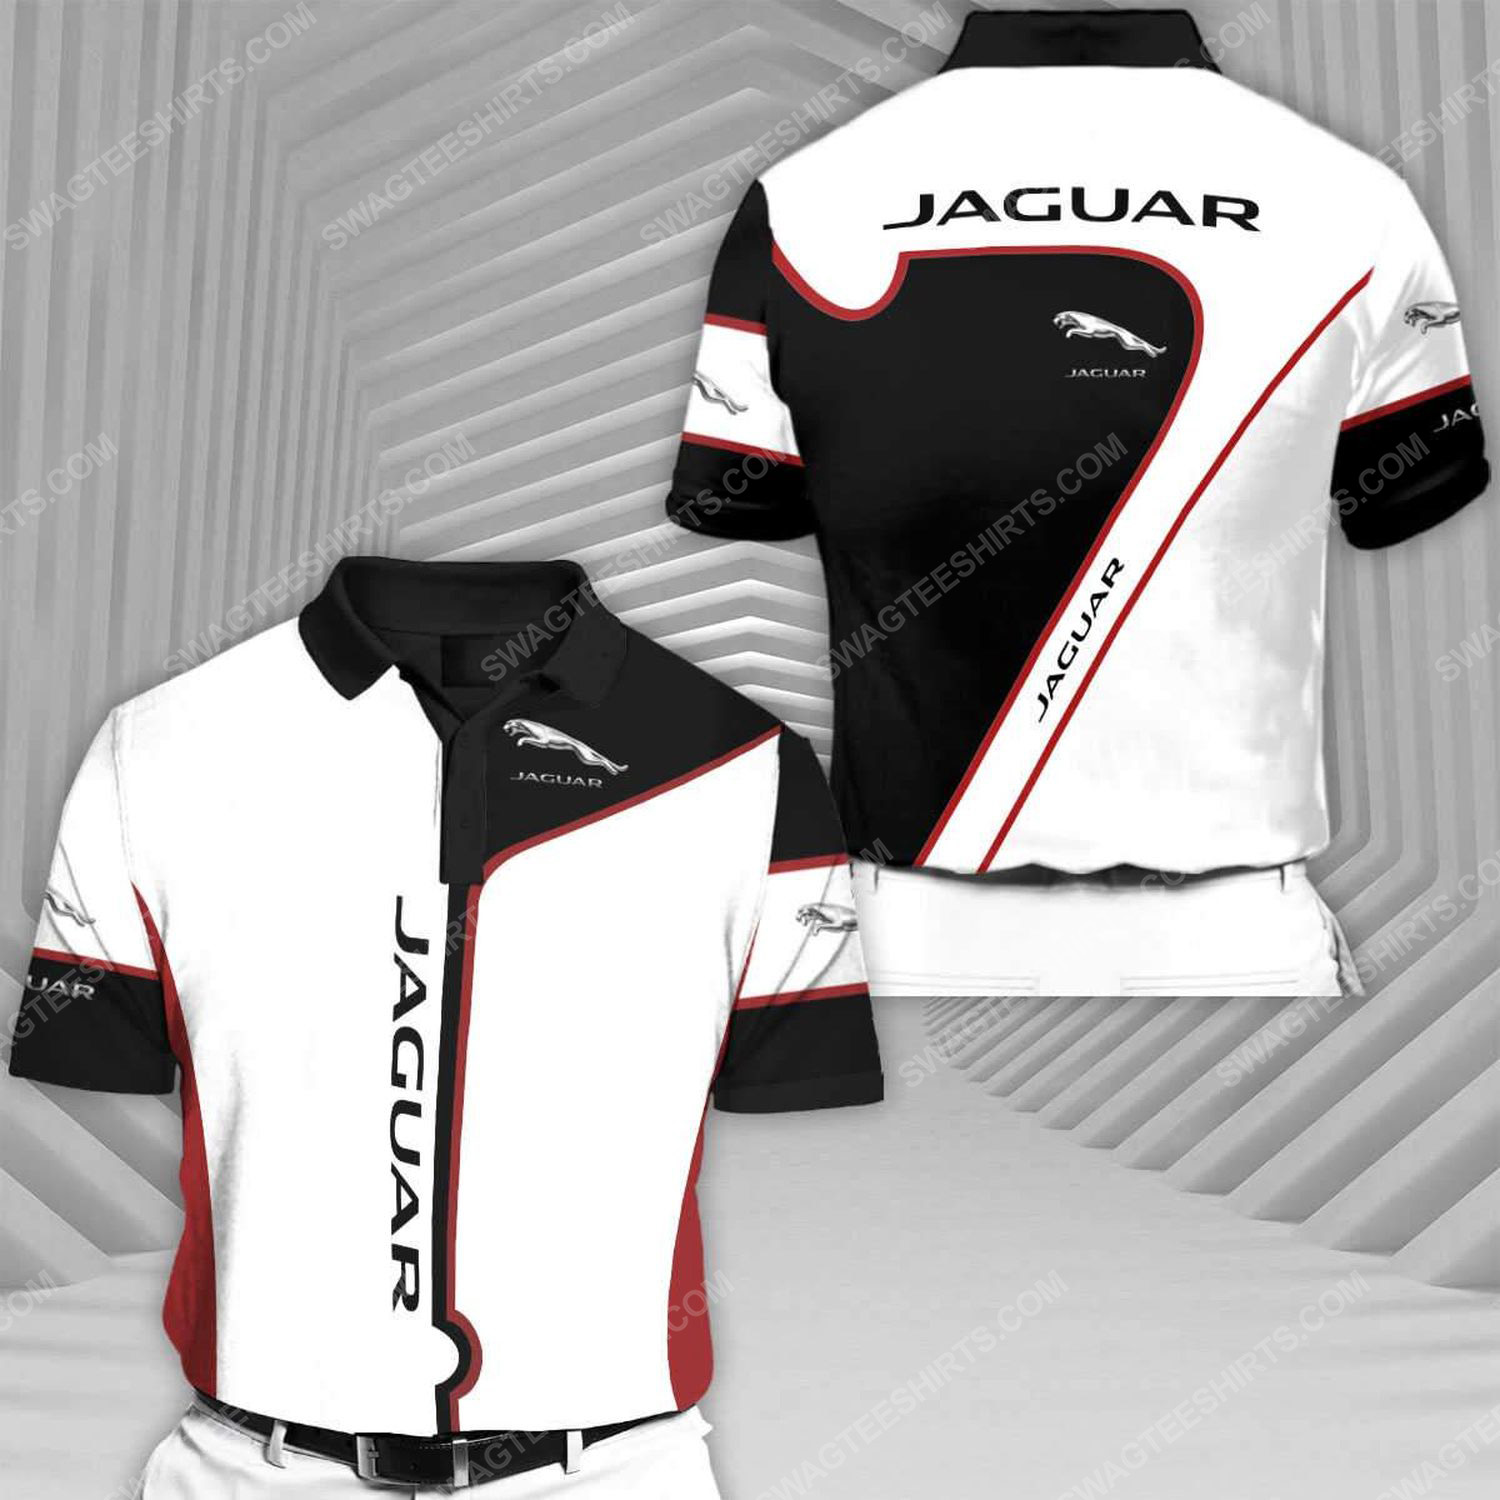 [special edition] Jaguar sports car racing all over print polo shirt – Maria